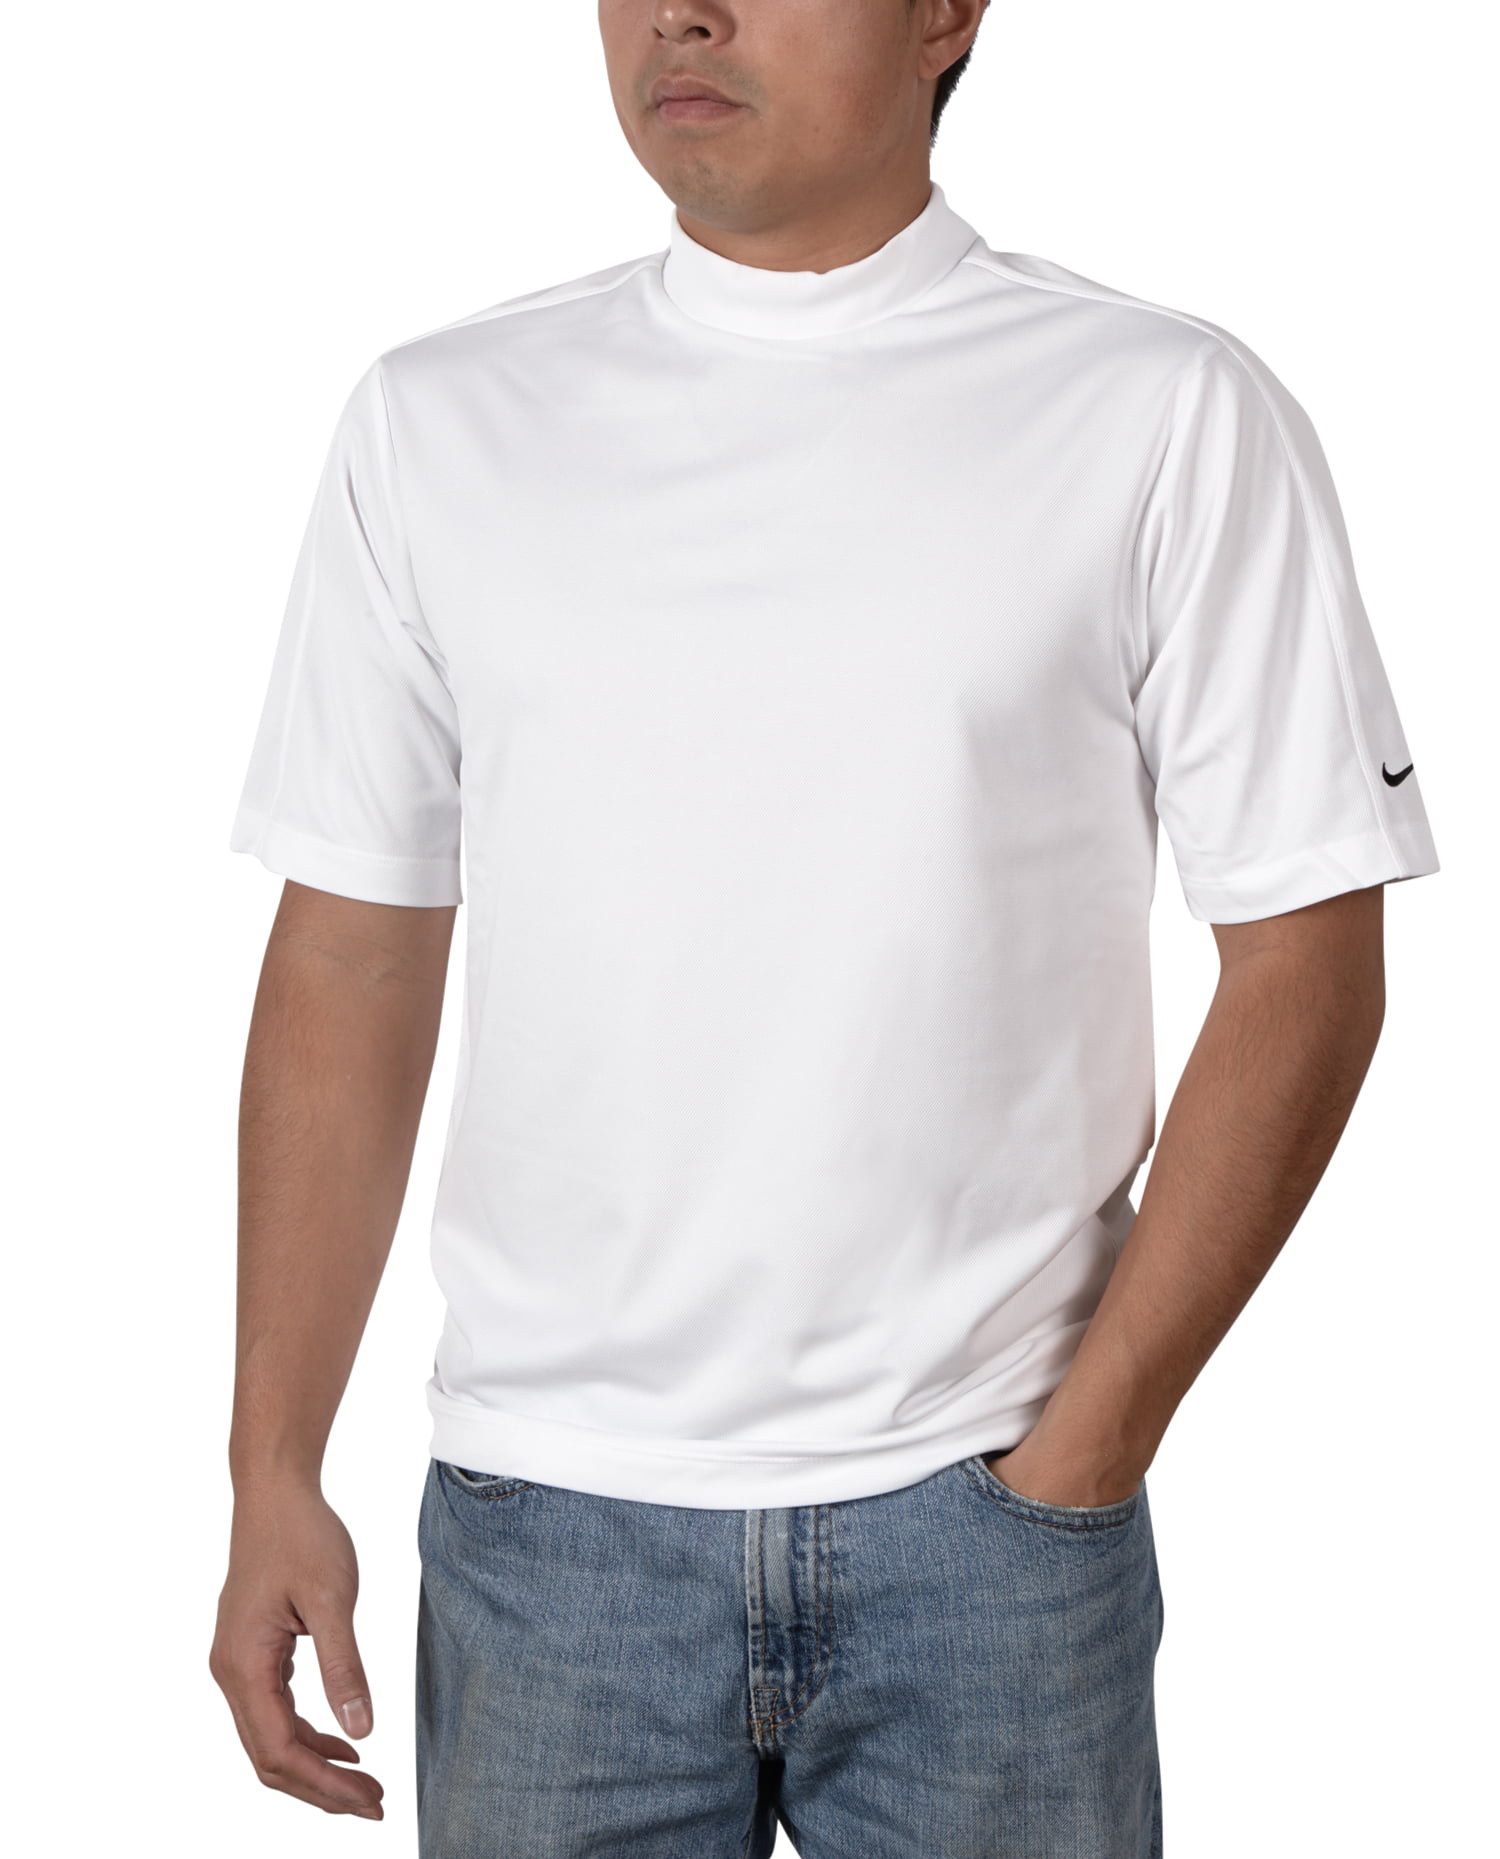 Download Nike - Nike Dri-FIT Tech Mock Polo Shirt - Walmart.com ...